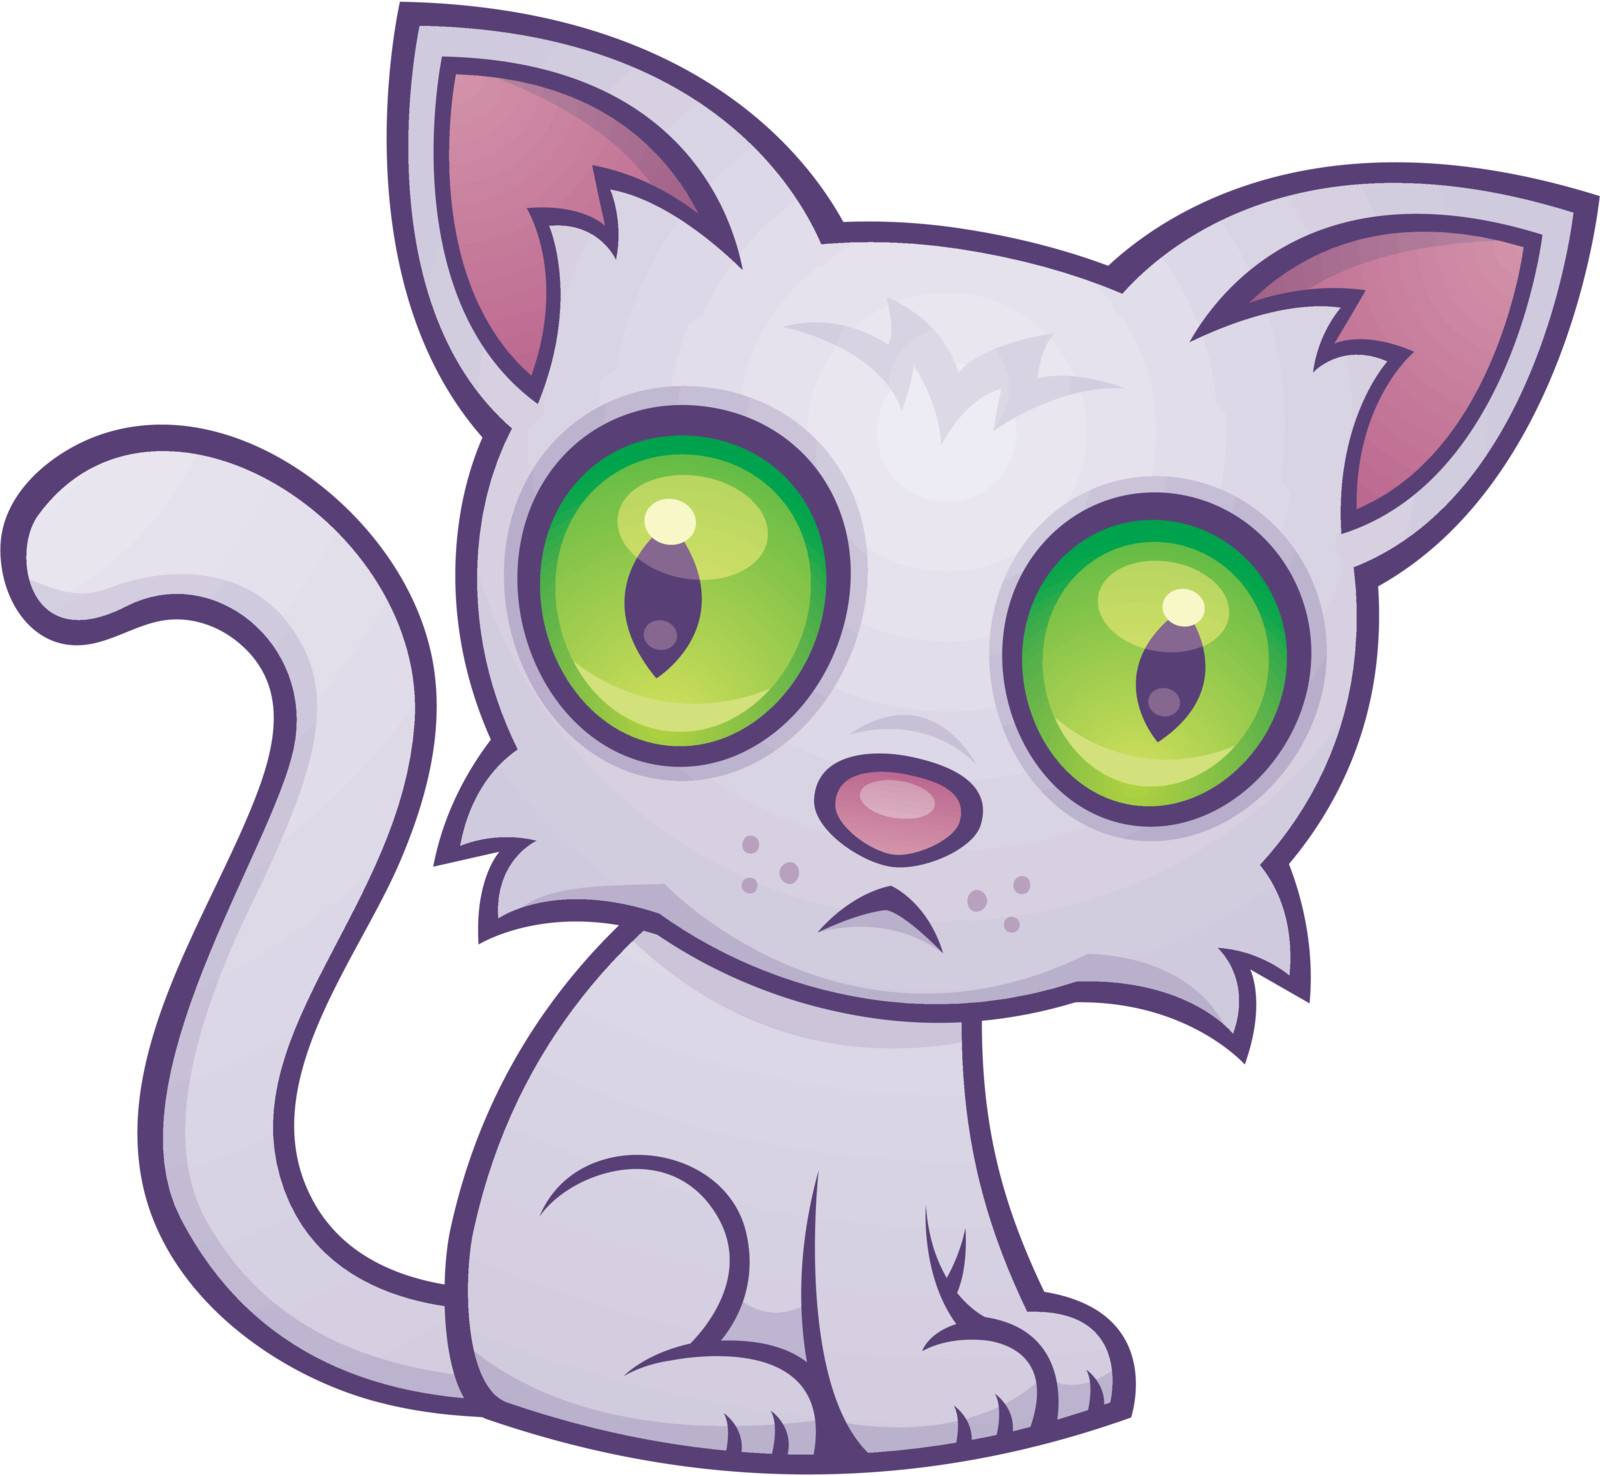 Vector cartoon illustration of a cute kitten with big green eyes.